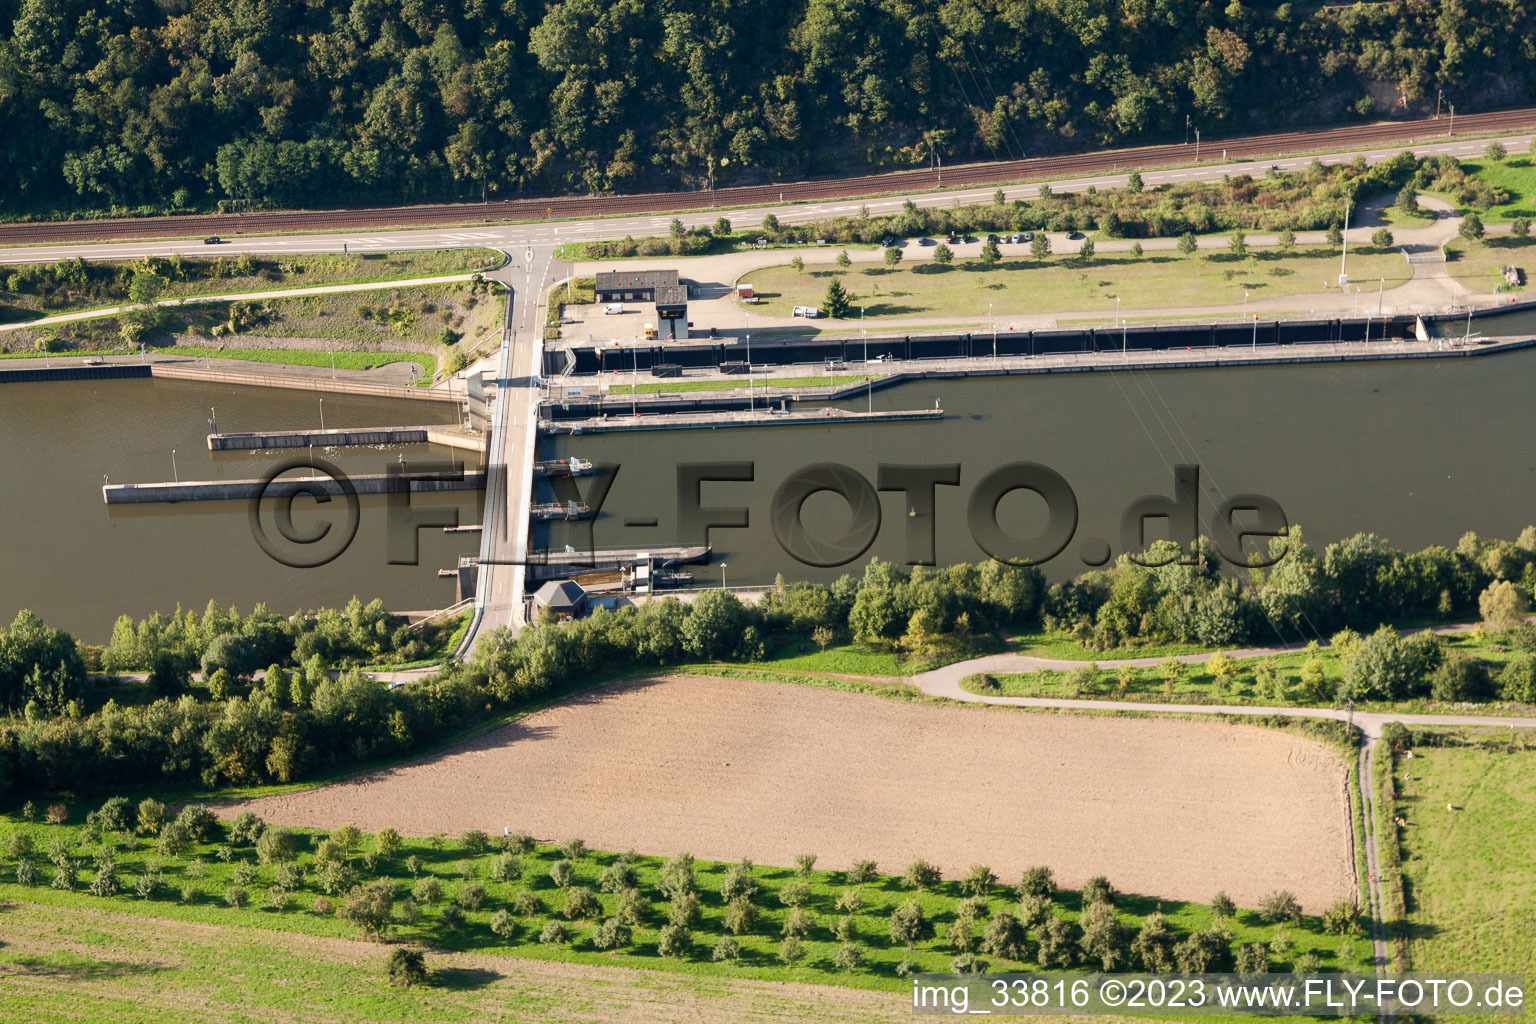 Barrage, lock in Serrig in the state Rhineland-Palatinate, Germany